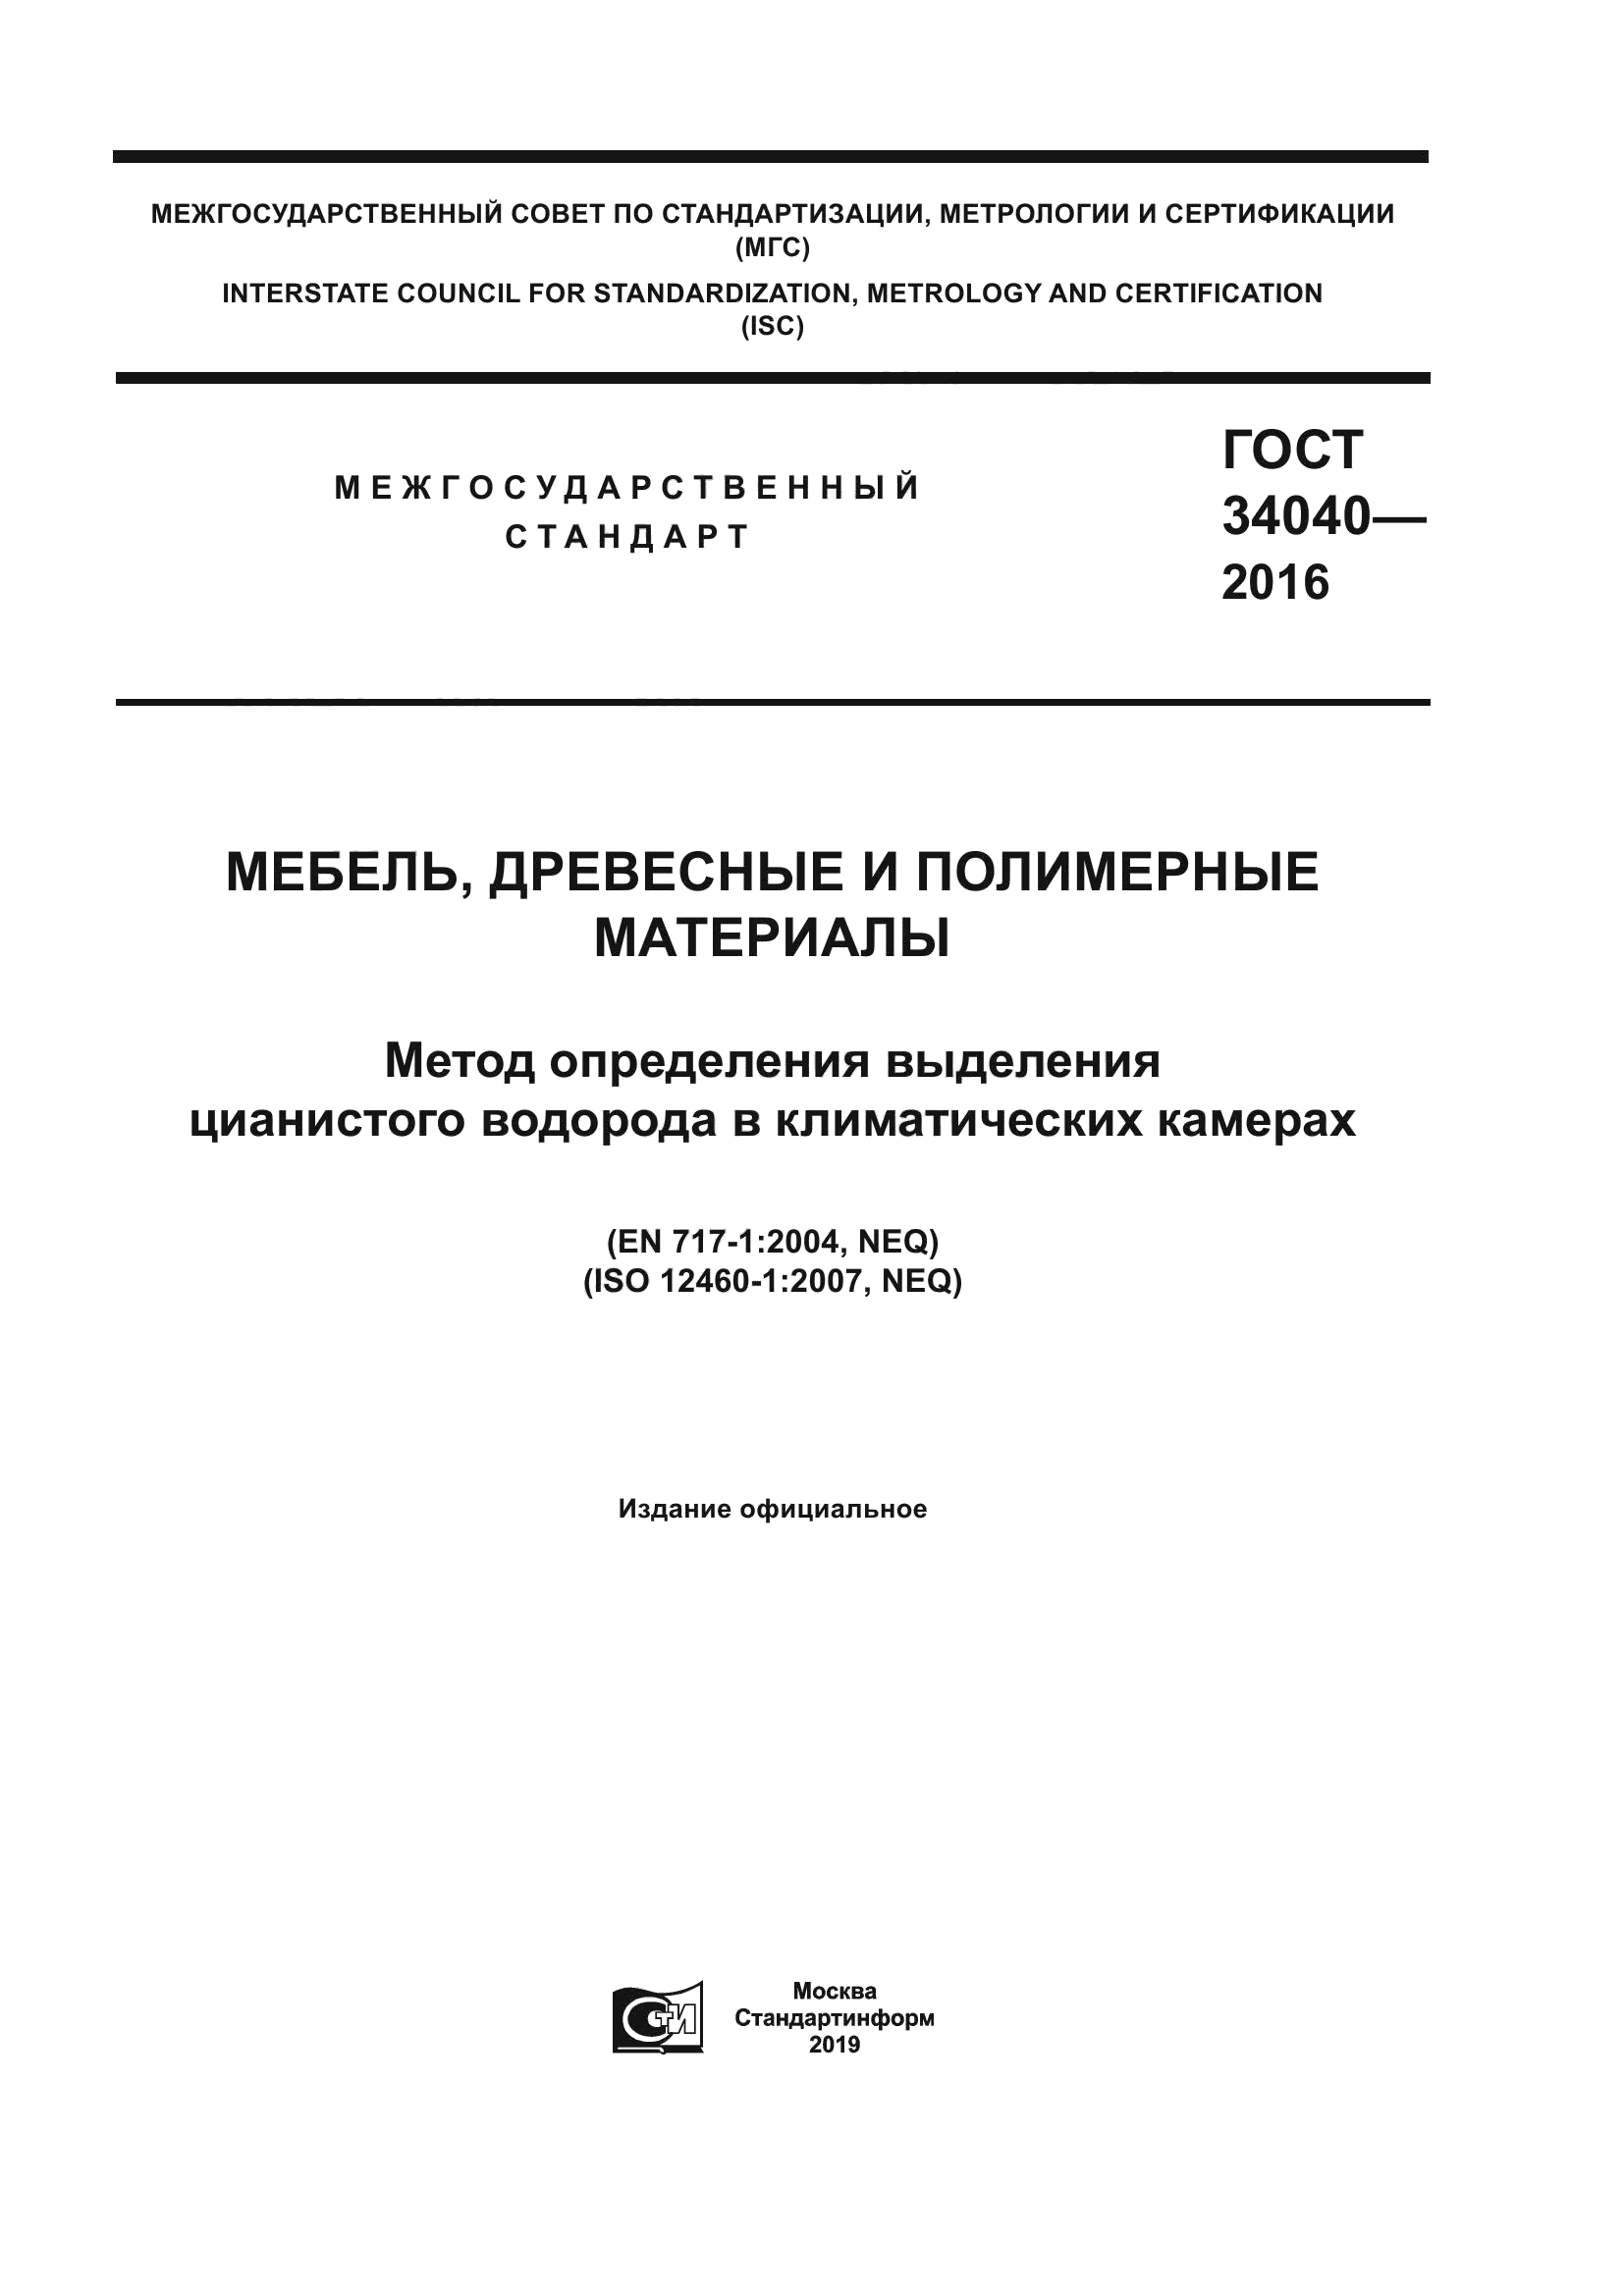 ГОСТ 34040-2016